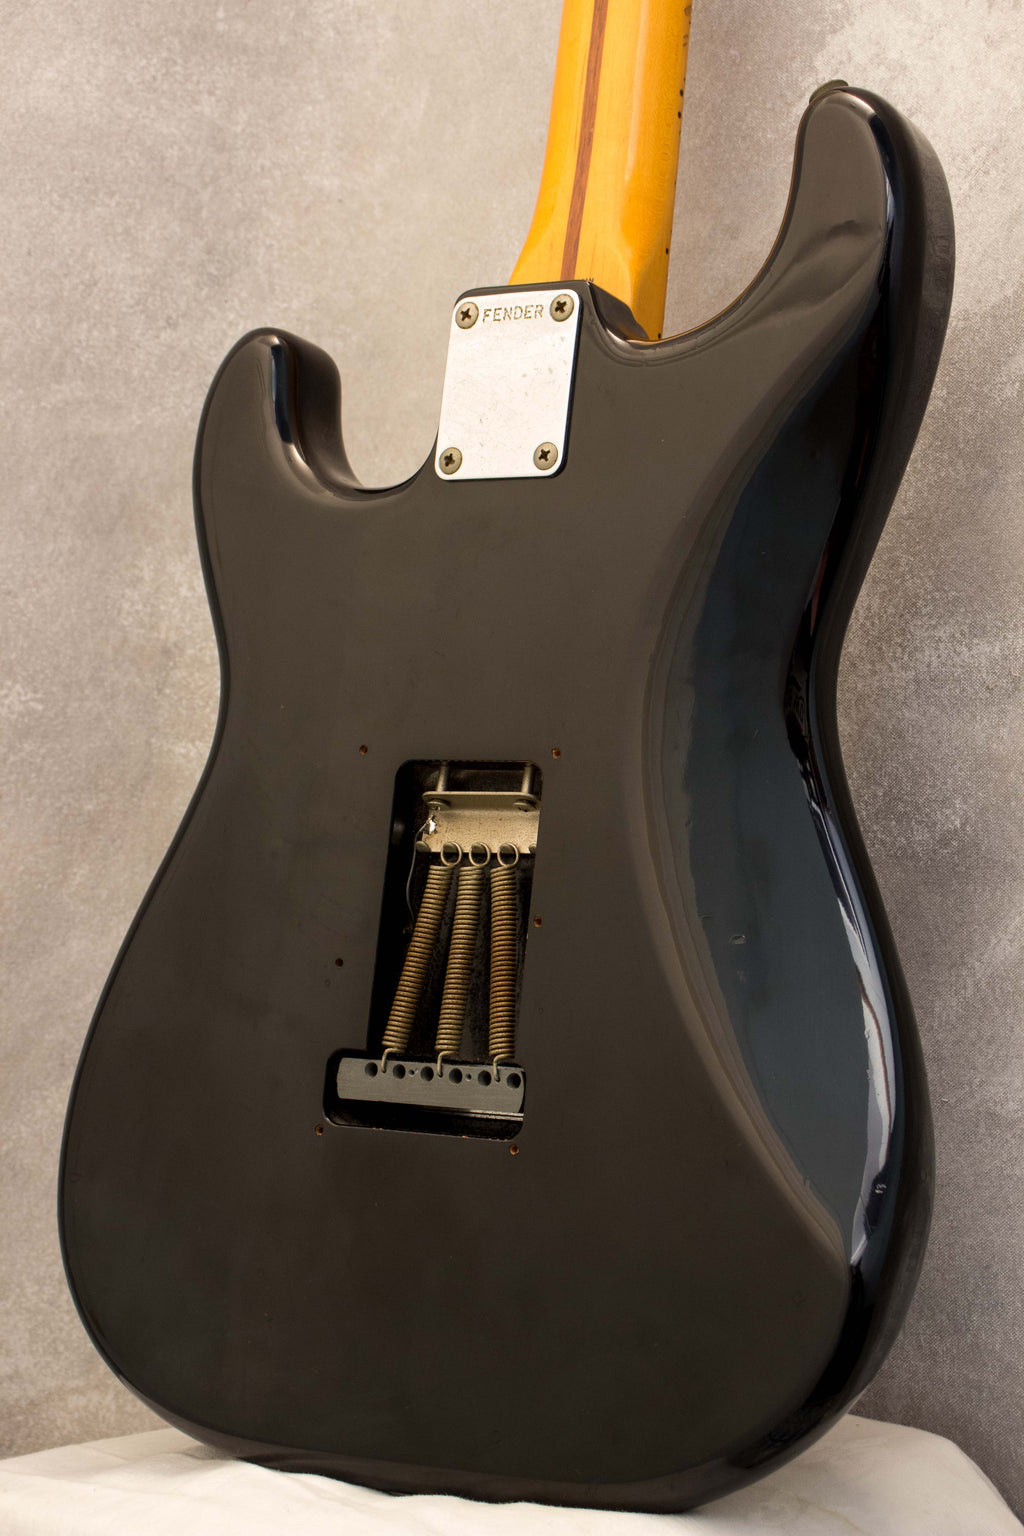 Fender Japan '57 Stratocaster ST57-55 Black 1986